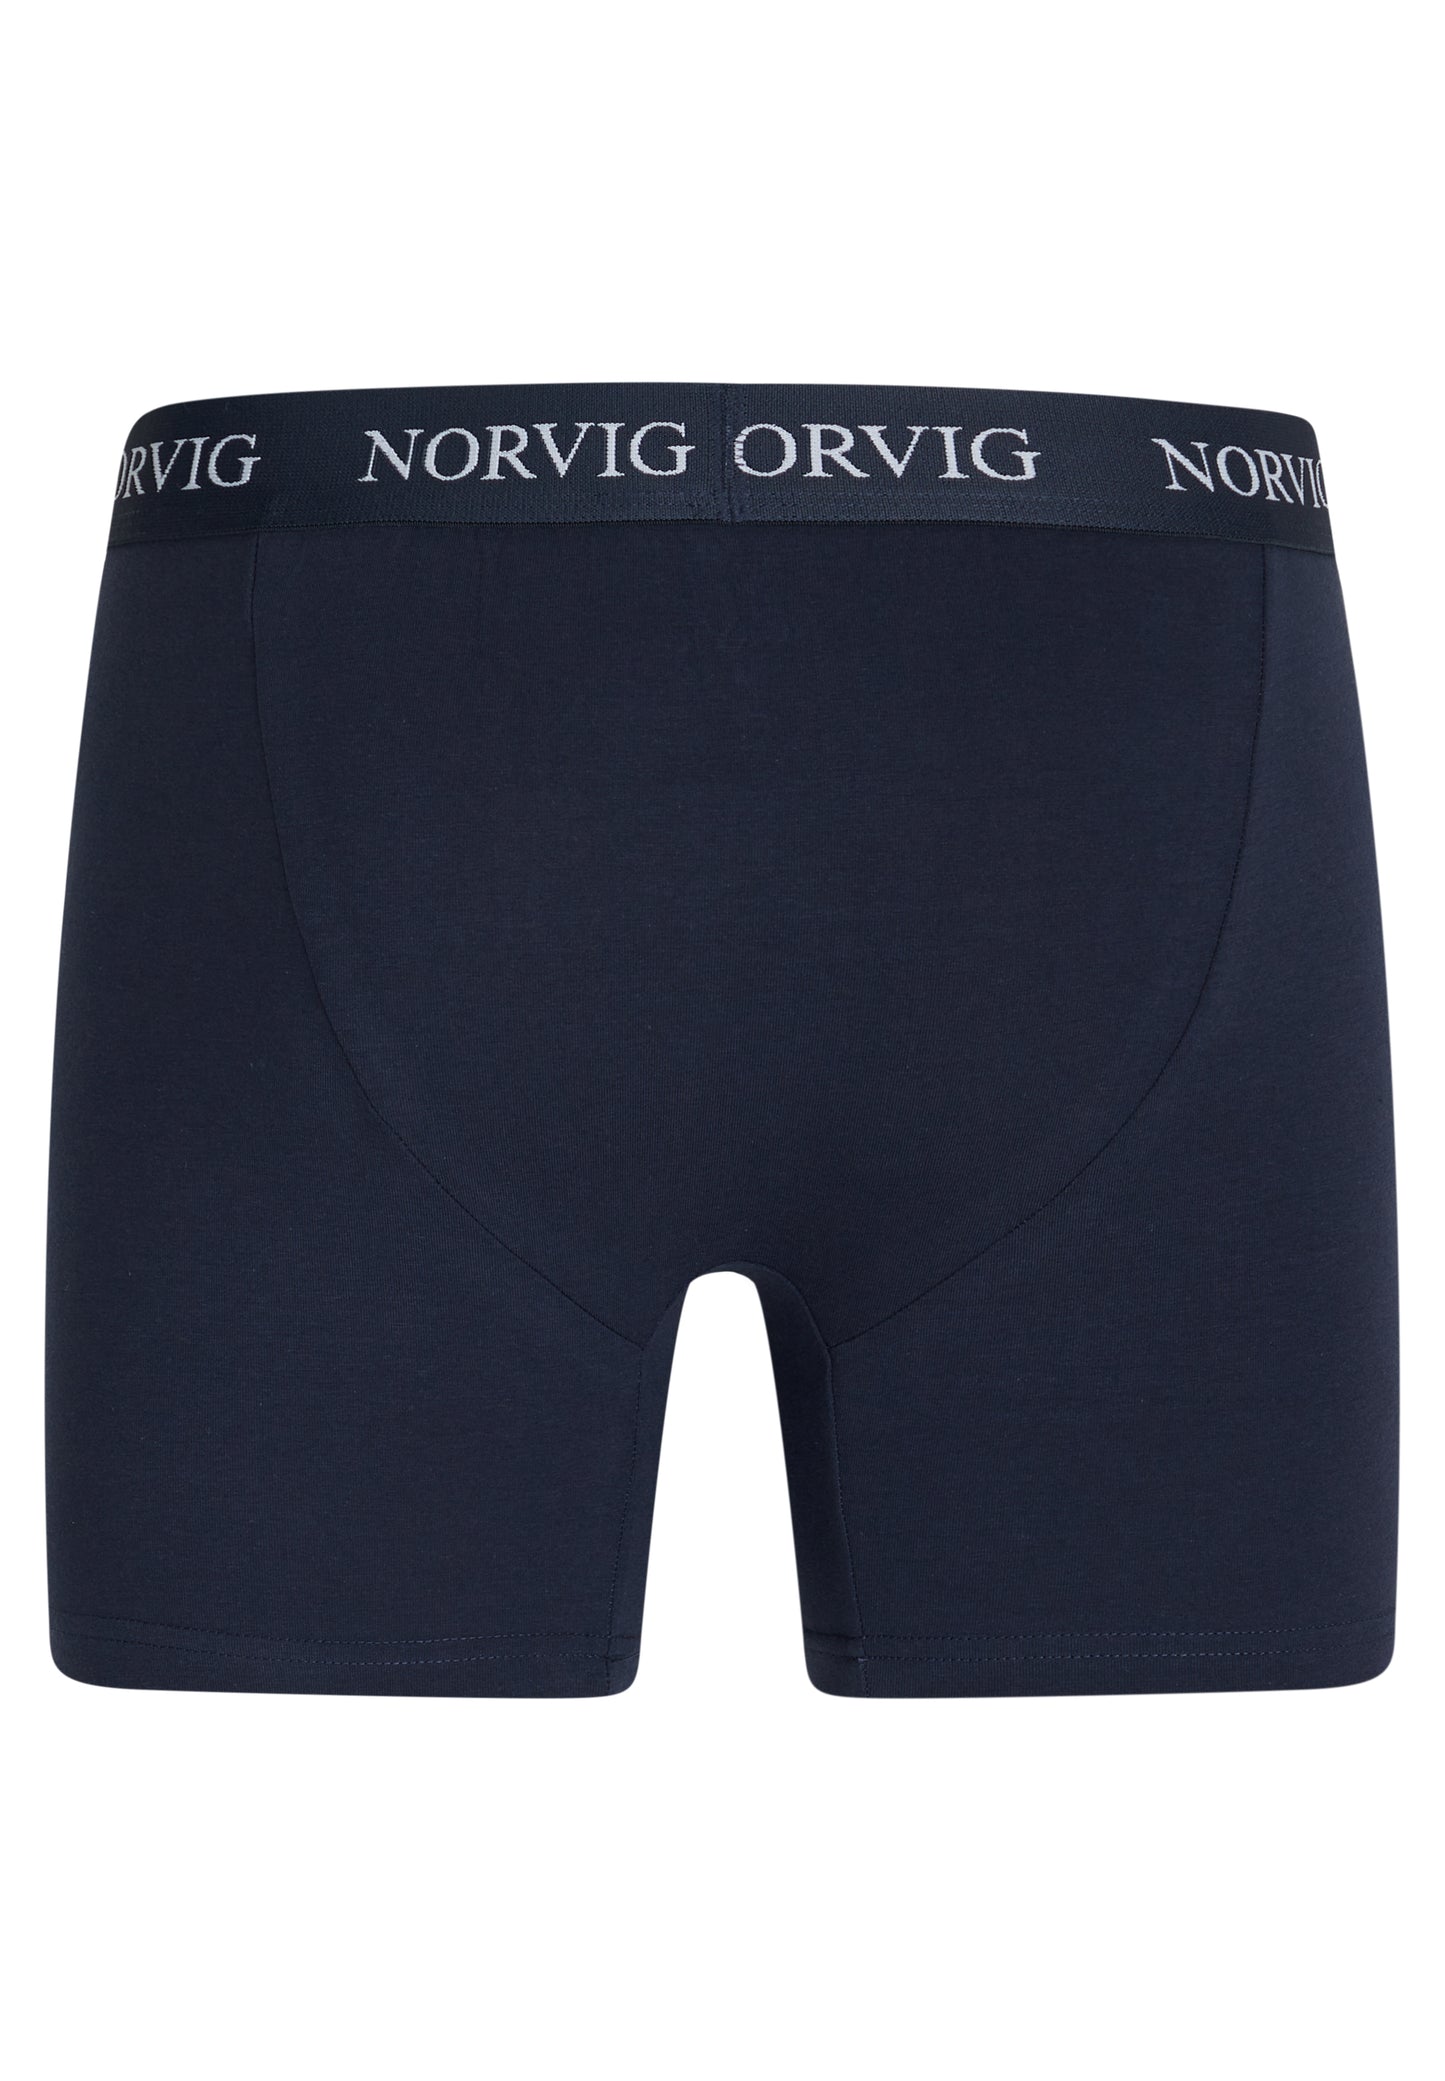 NORVIG 6-pak Tights sort/navy